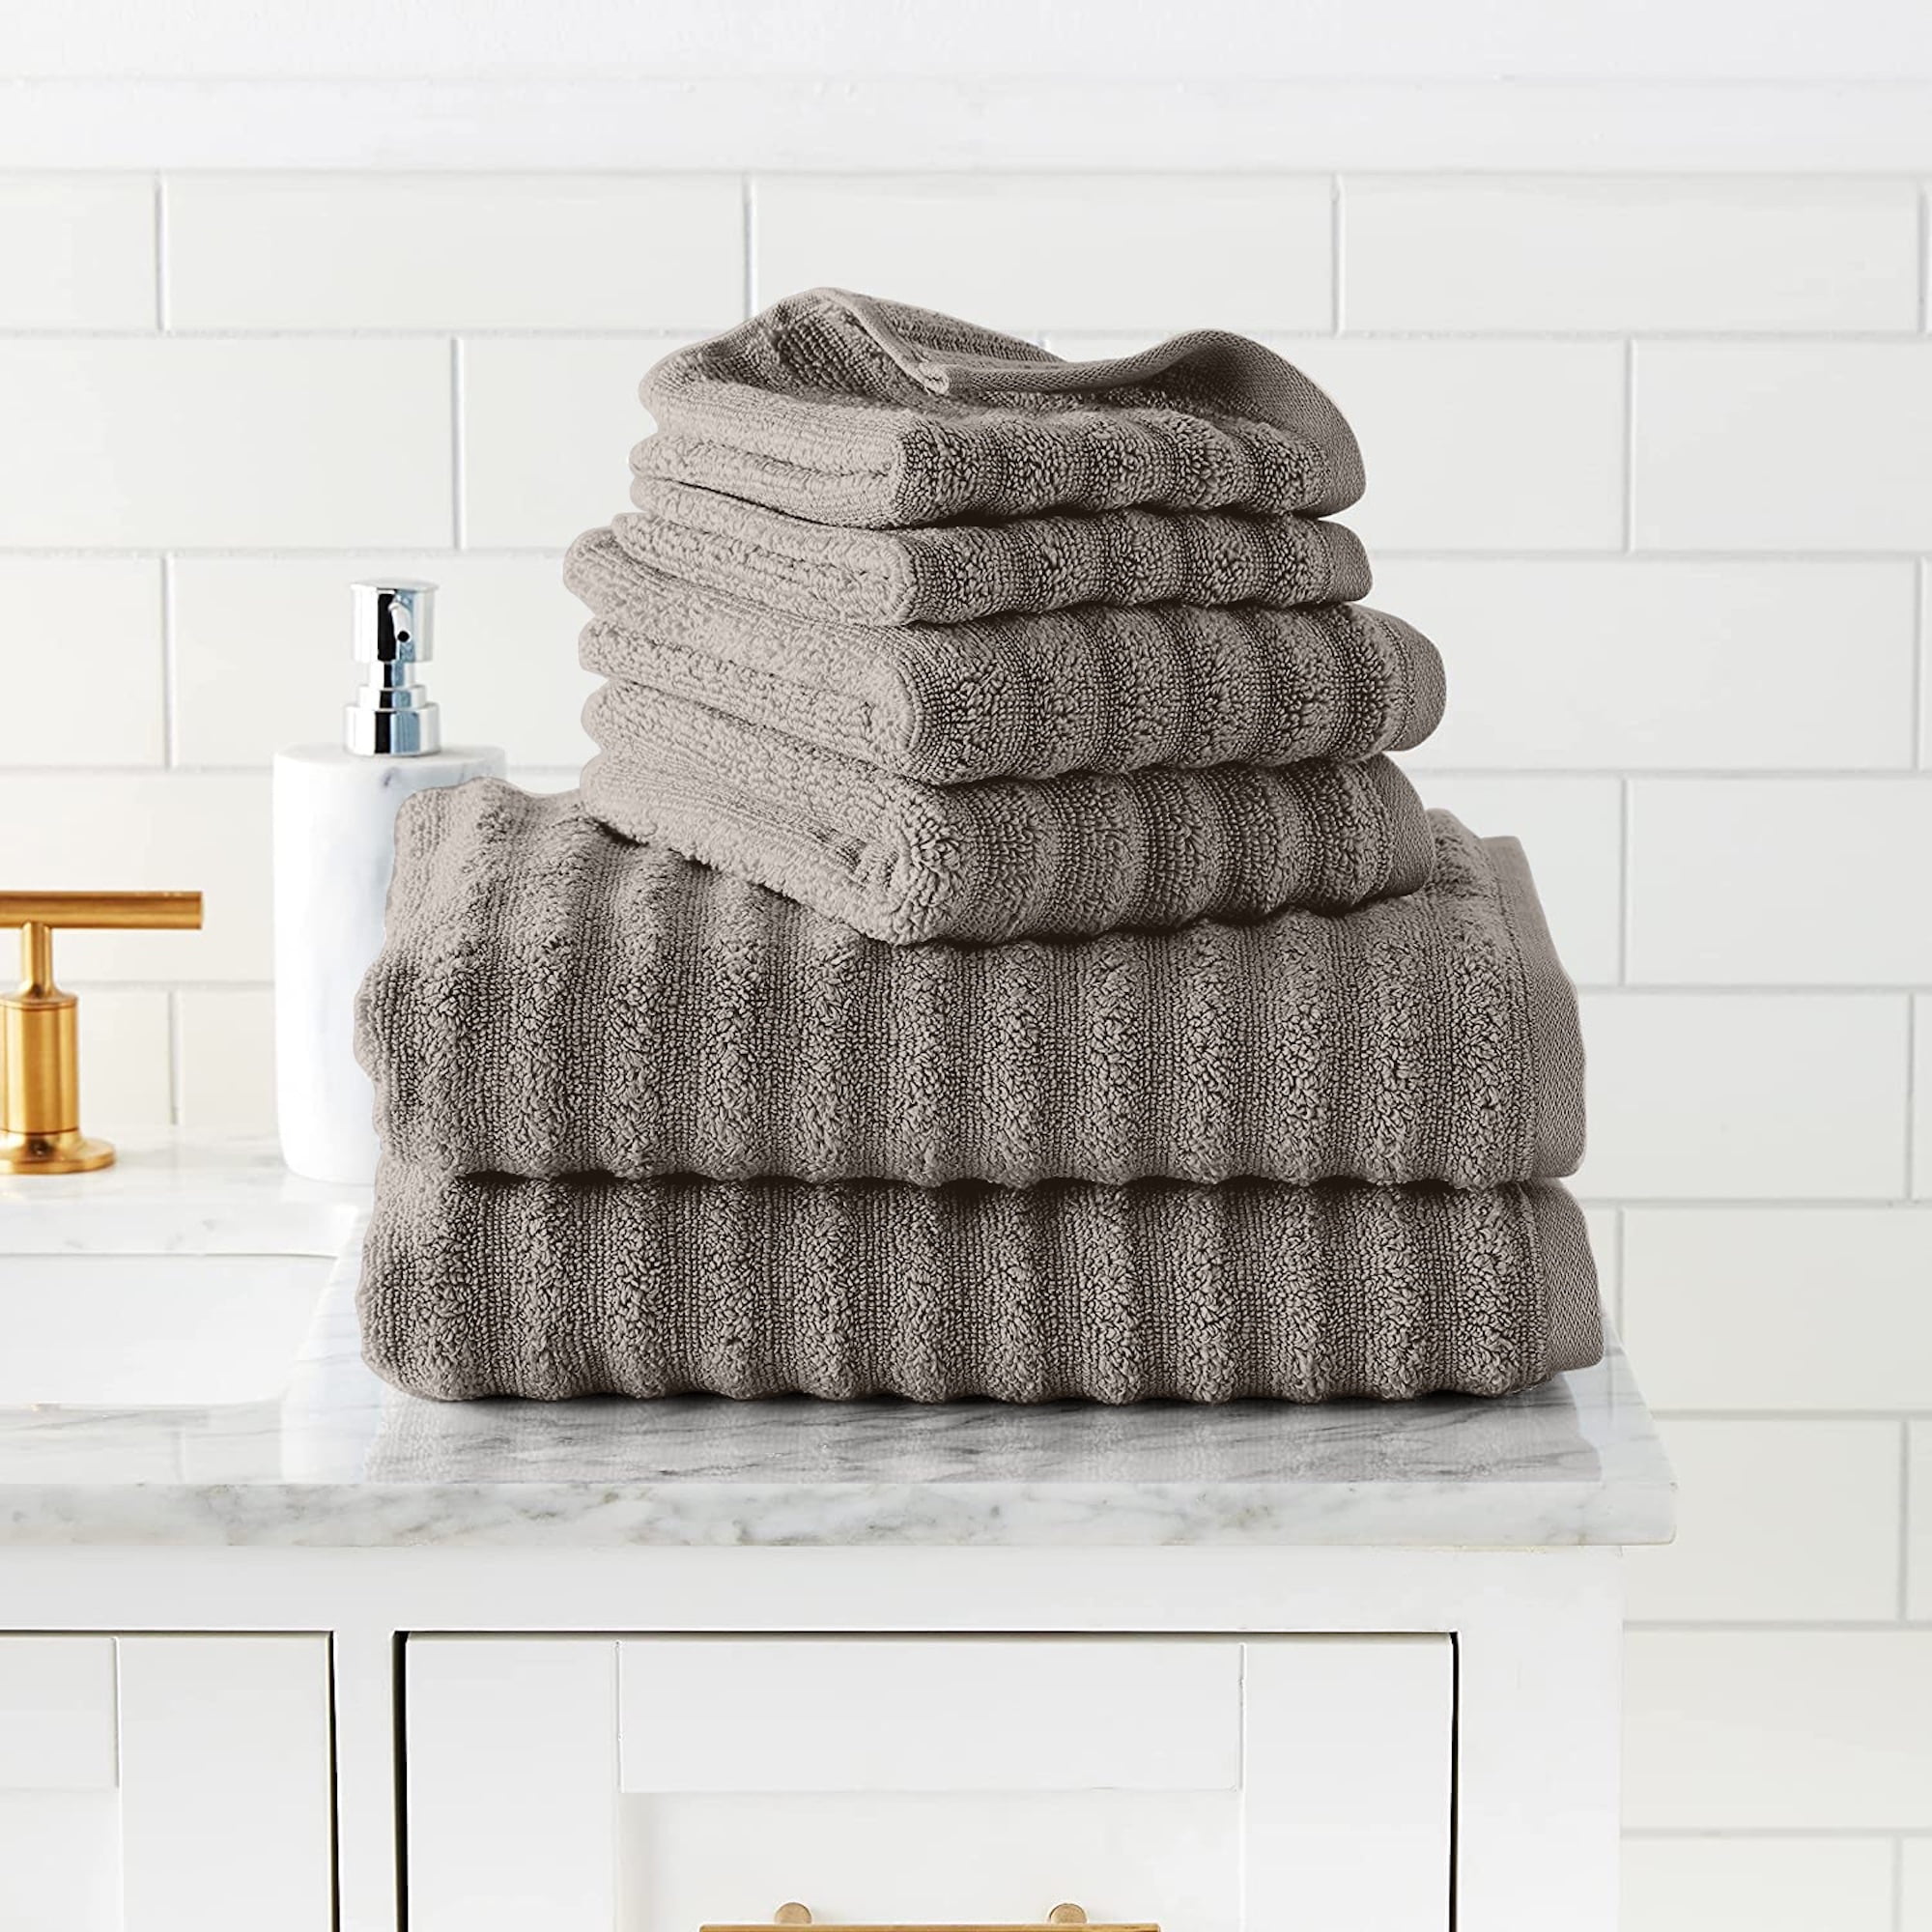 Bear 6 Piece 100% Cotton Towel Set AllModern Color: Concrete Gray